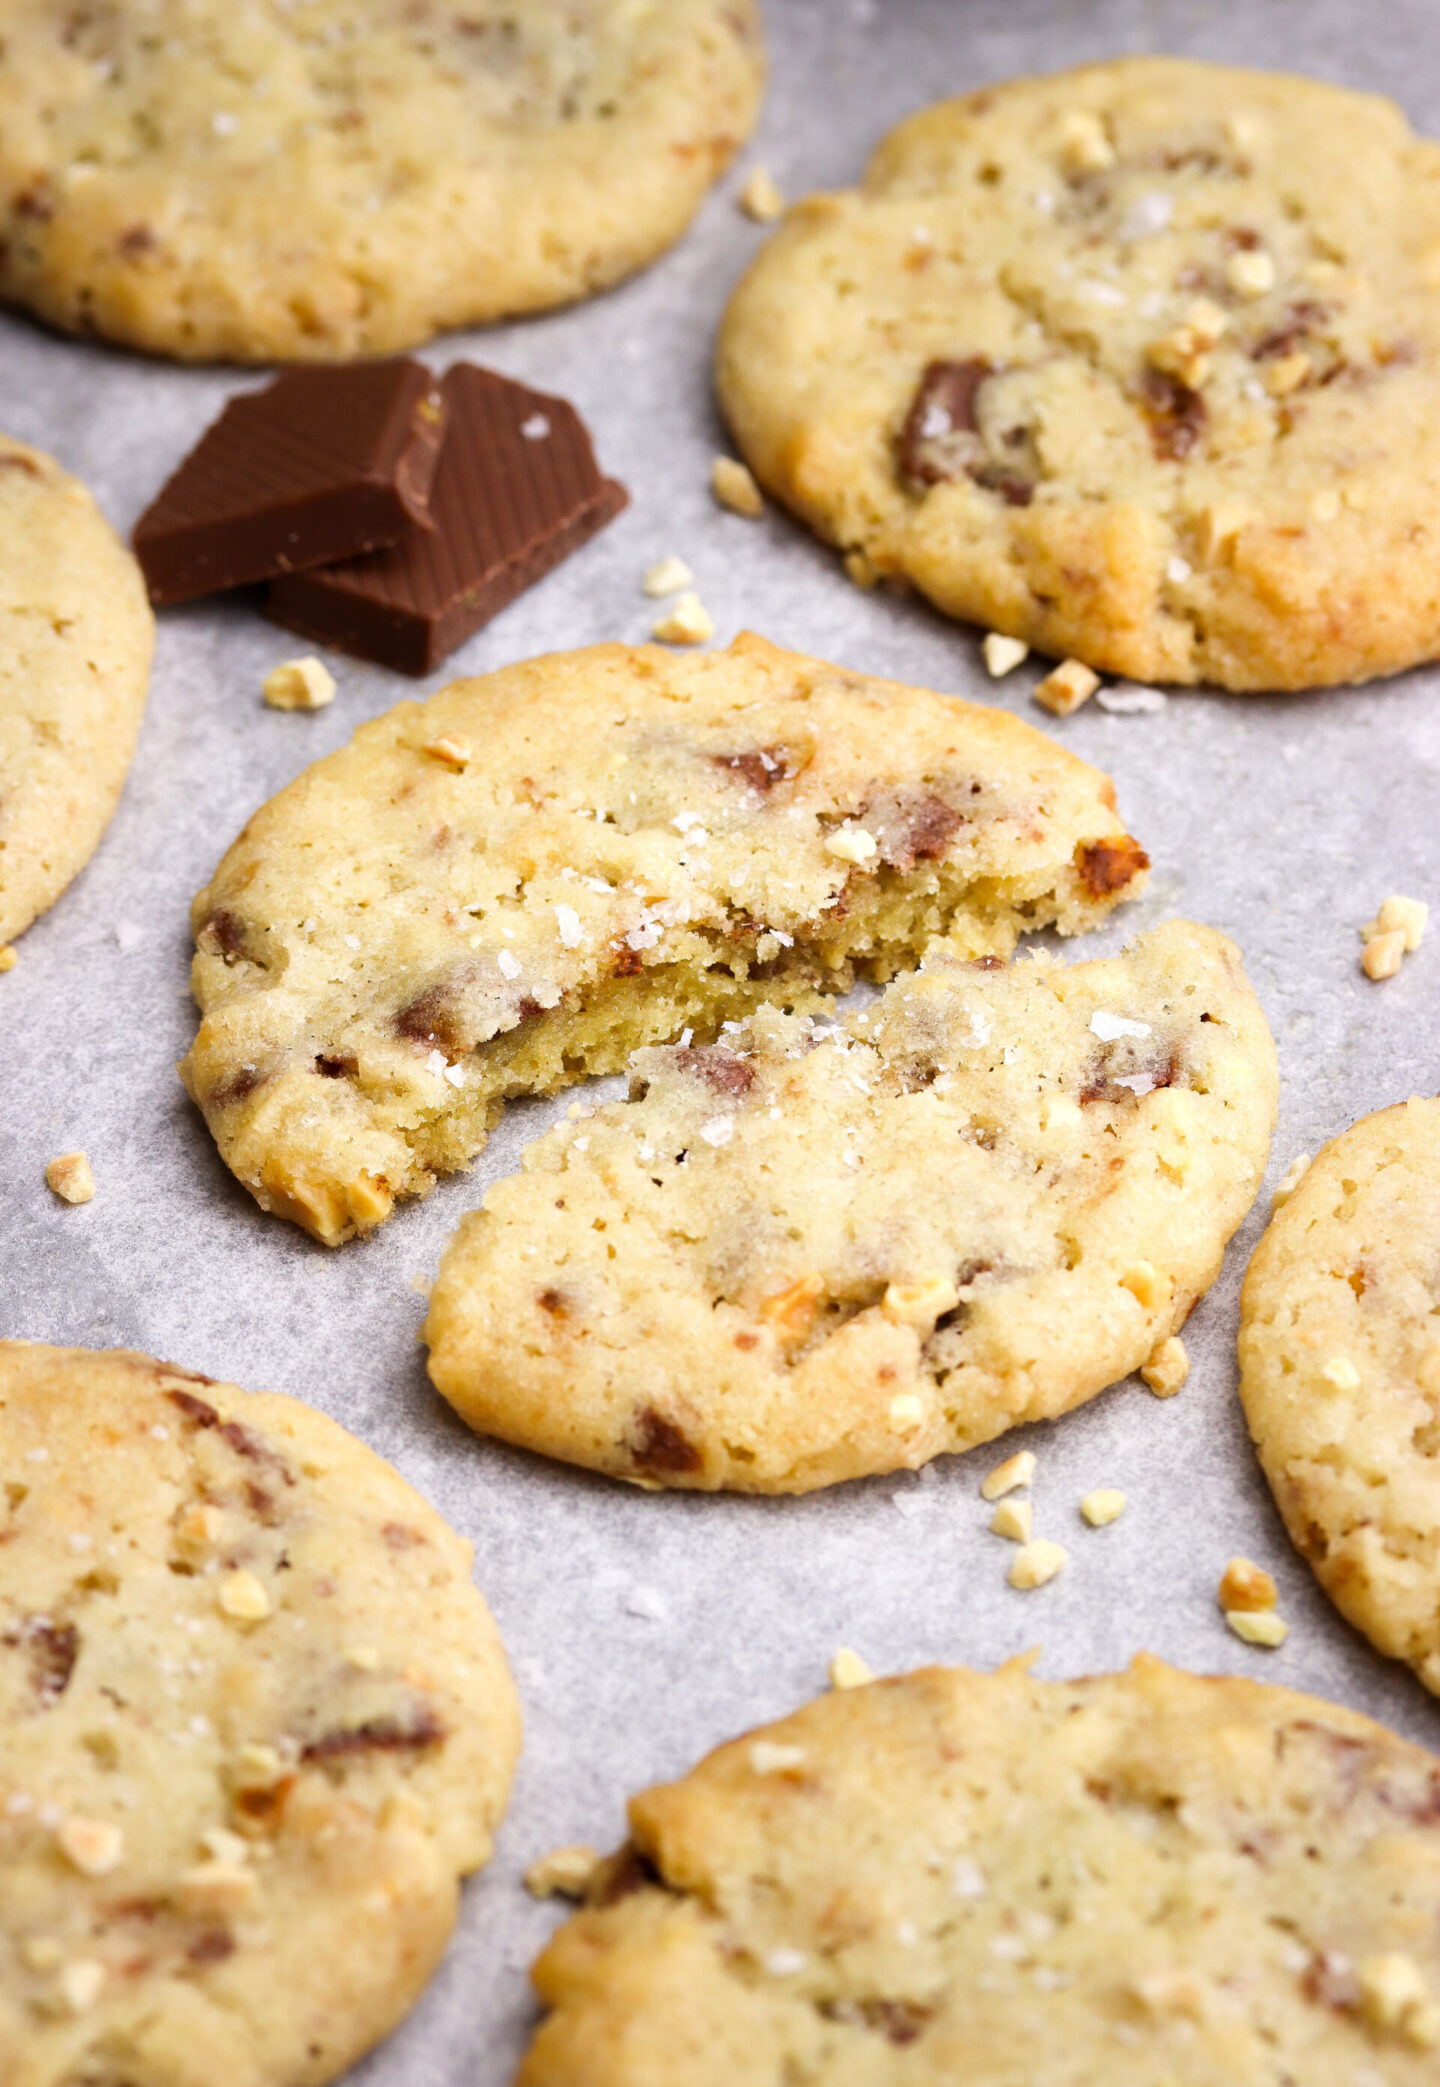 Dream Cookies AKA Drömmar With Salted Caramel Chocolate & Almonds